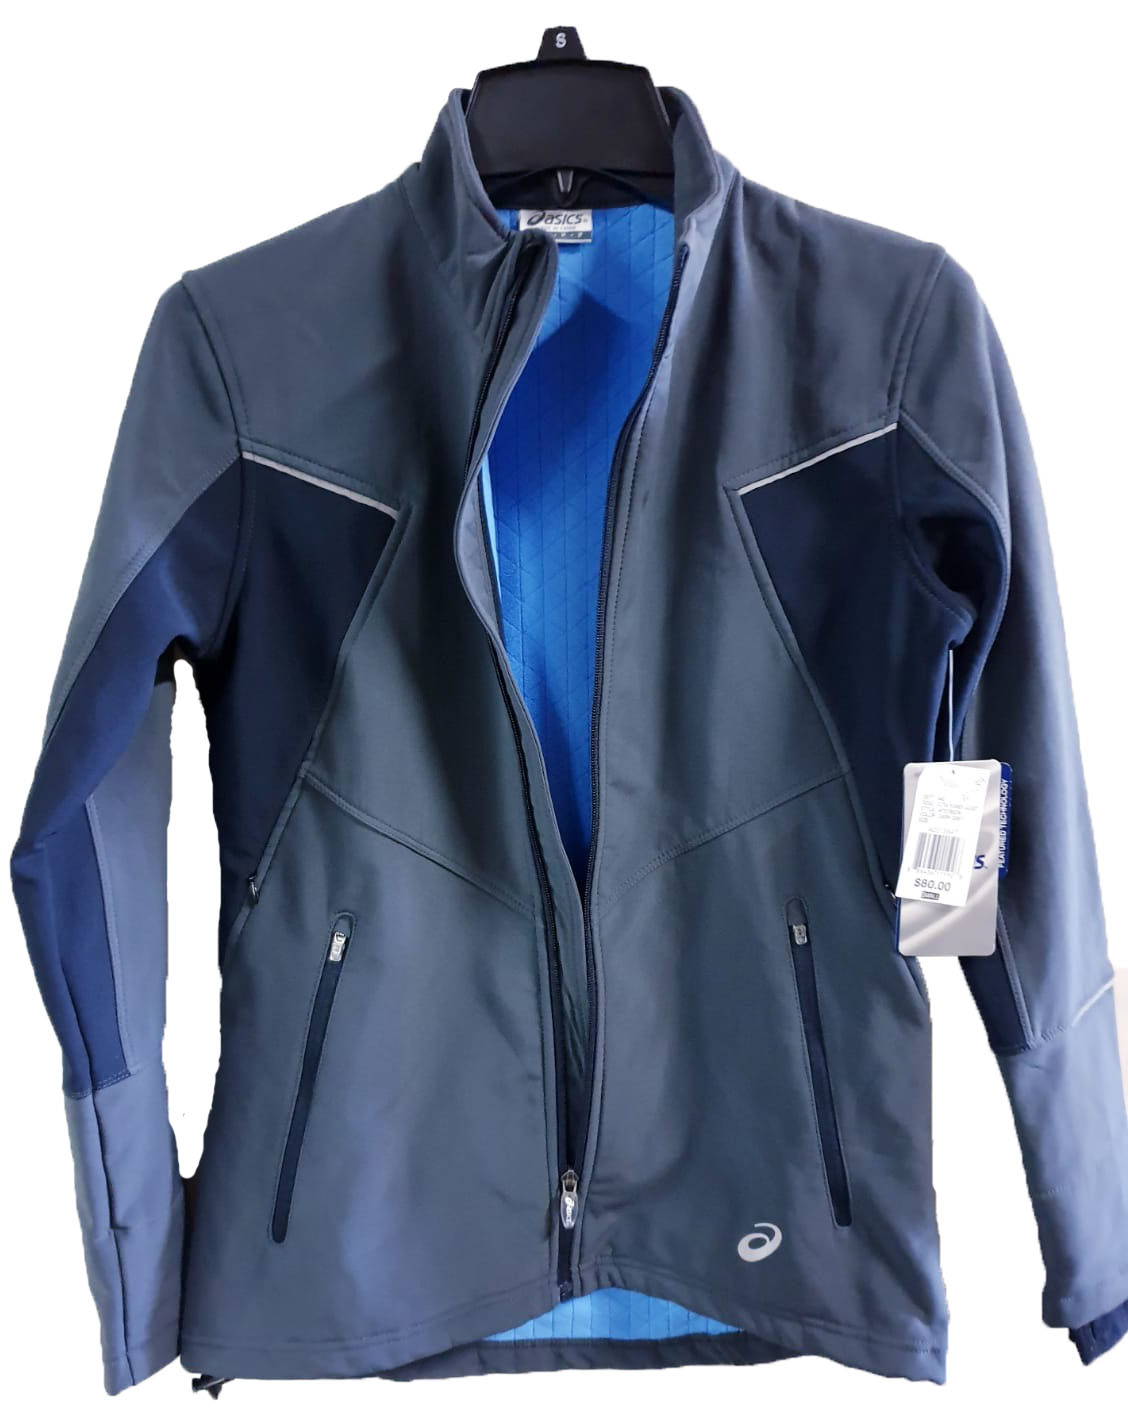 Asics Women's Ultra Waterproof Soft Shell Running Jacket, Dark Gray, Medium - image 4 of 6